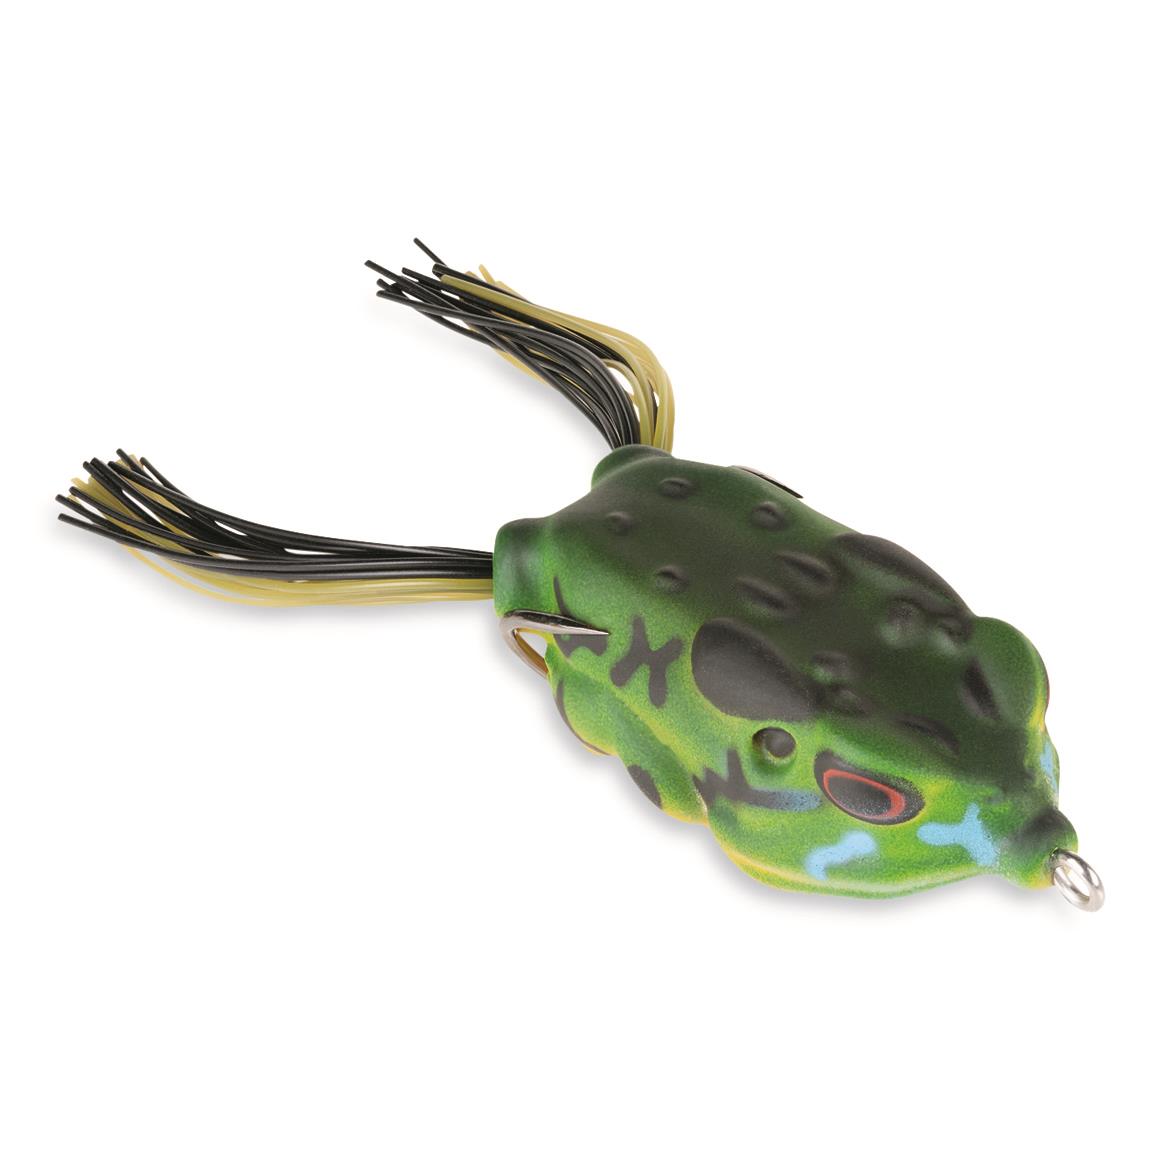 Lunkerhunt Frog Bait Combo, 3-pc